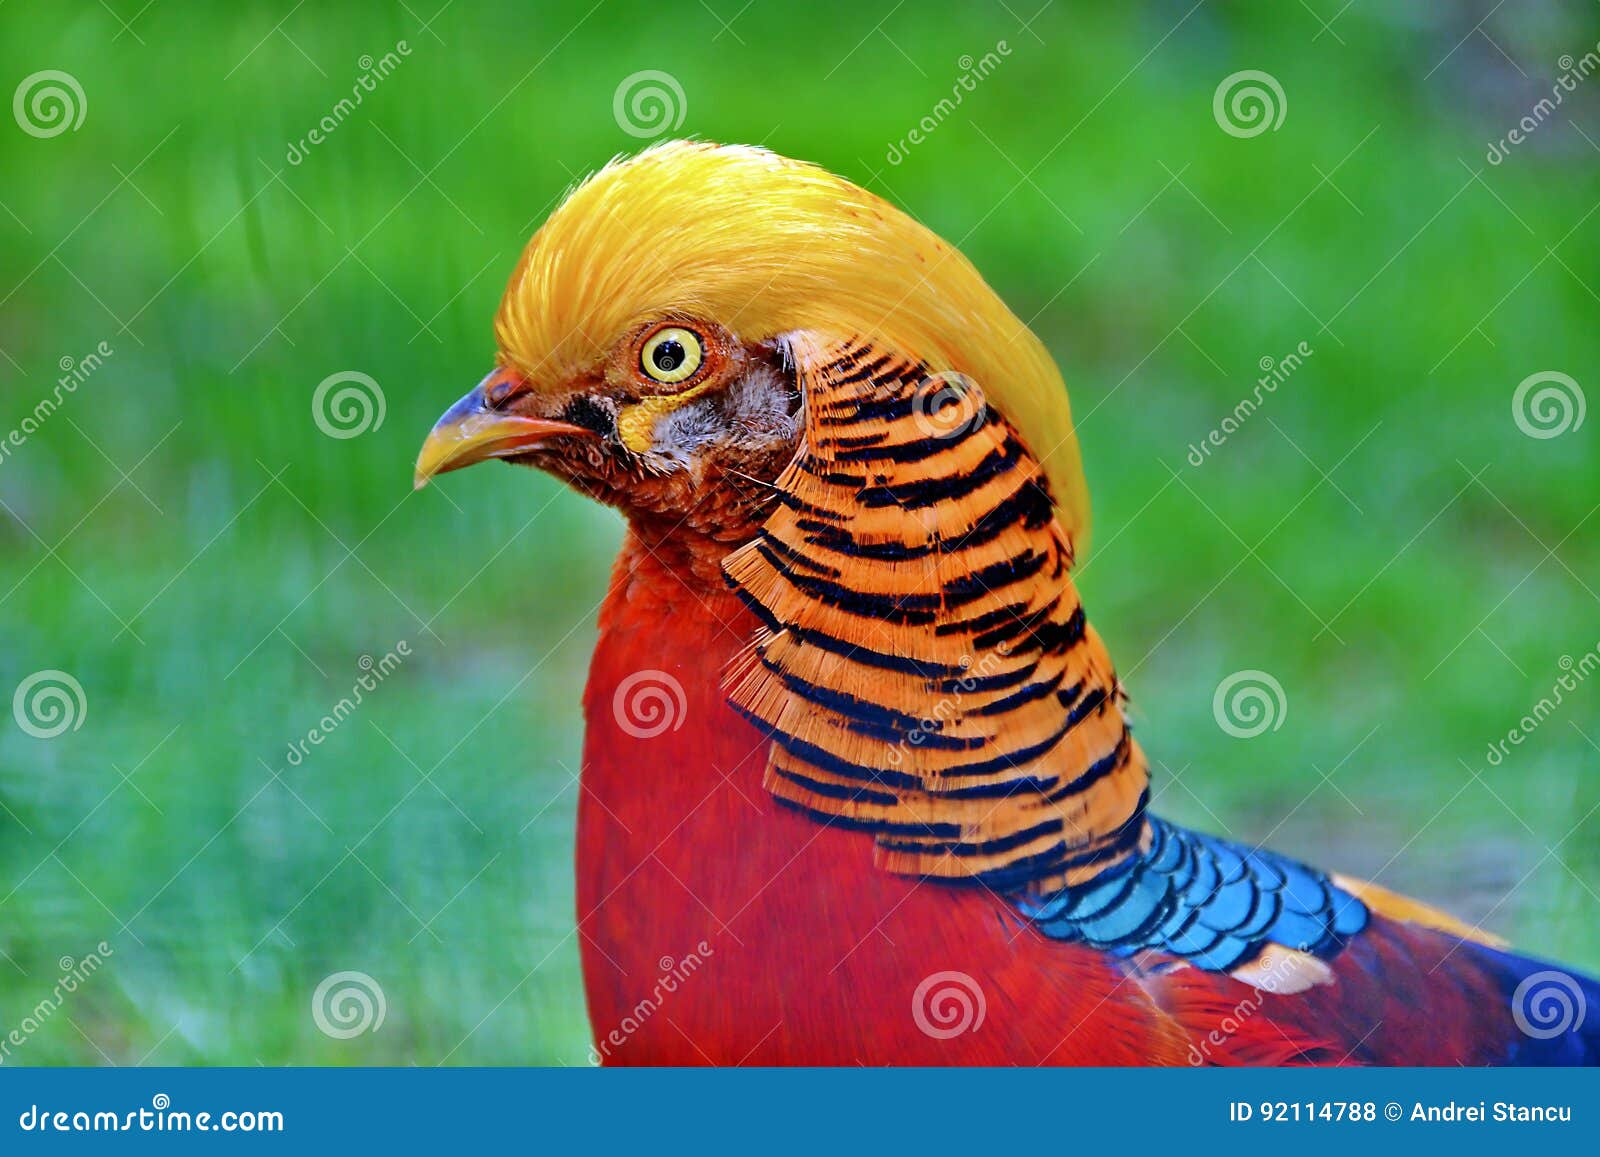 golden pheasant bird